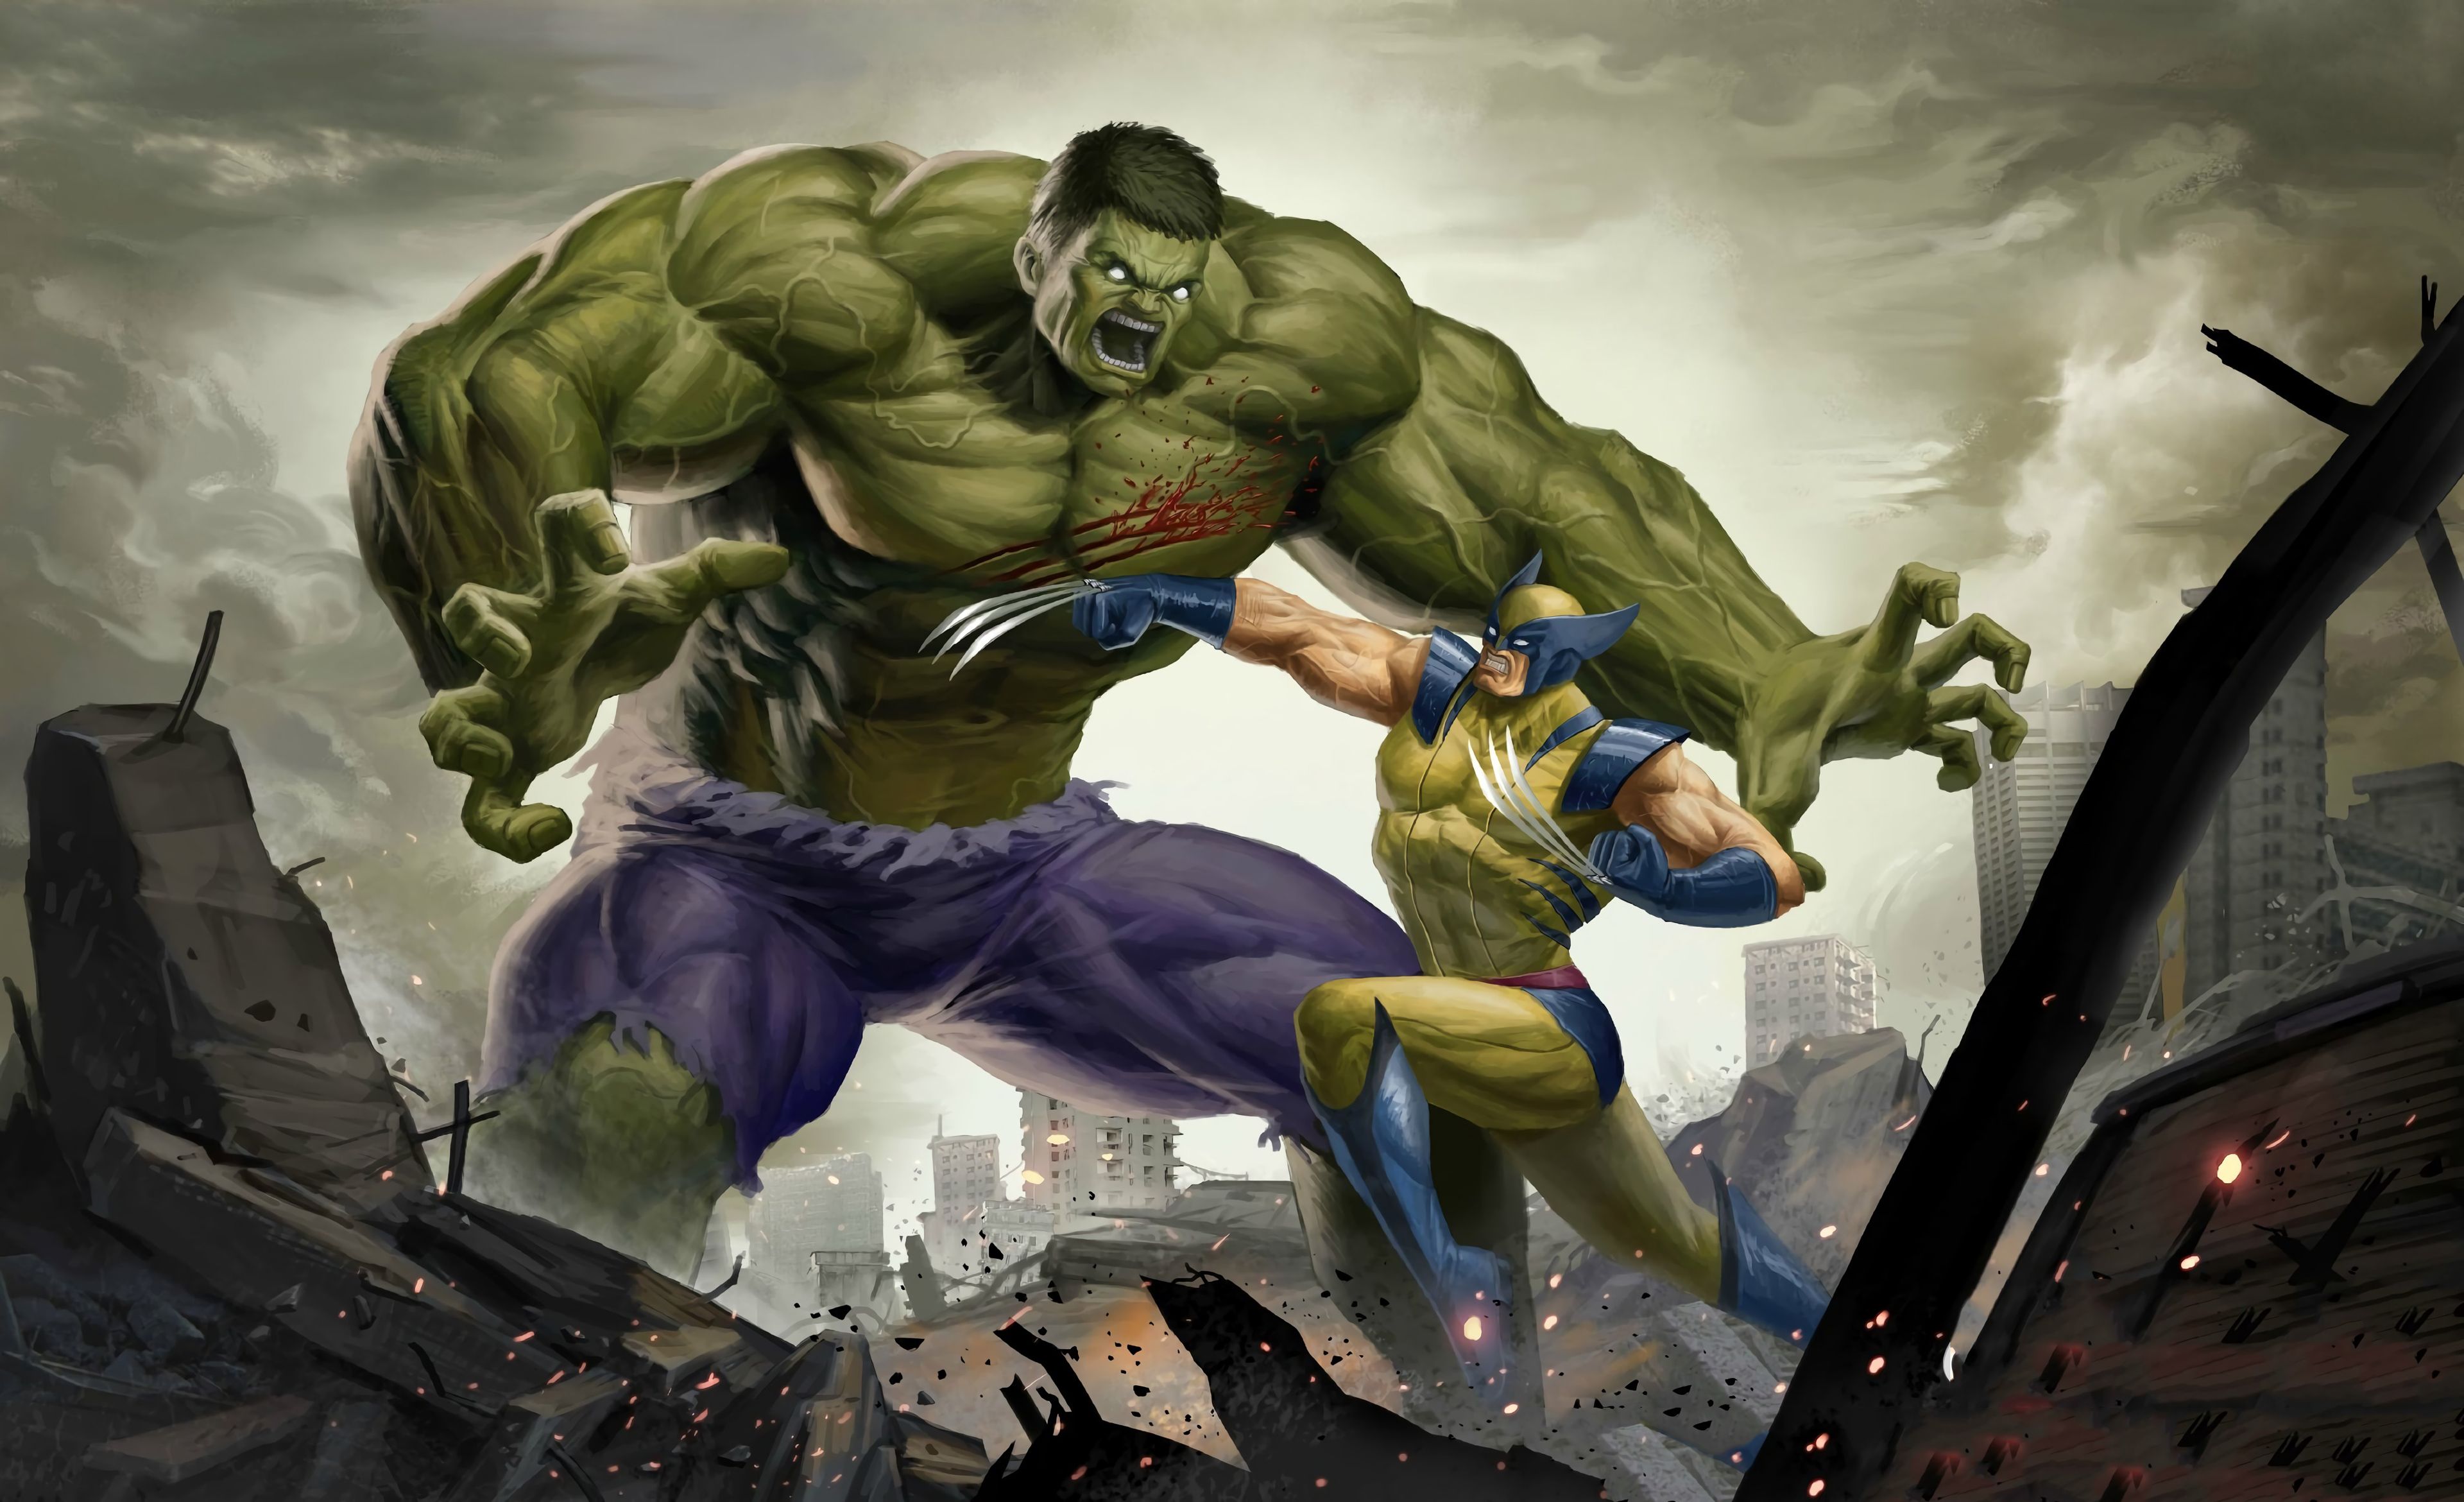 Art Hulk Vs Wolverine 4k, HD Superheroes, 4k Wallpaper, Image, Background, Photo and Picture